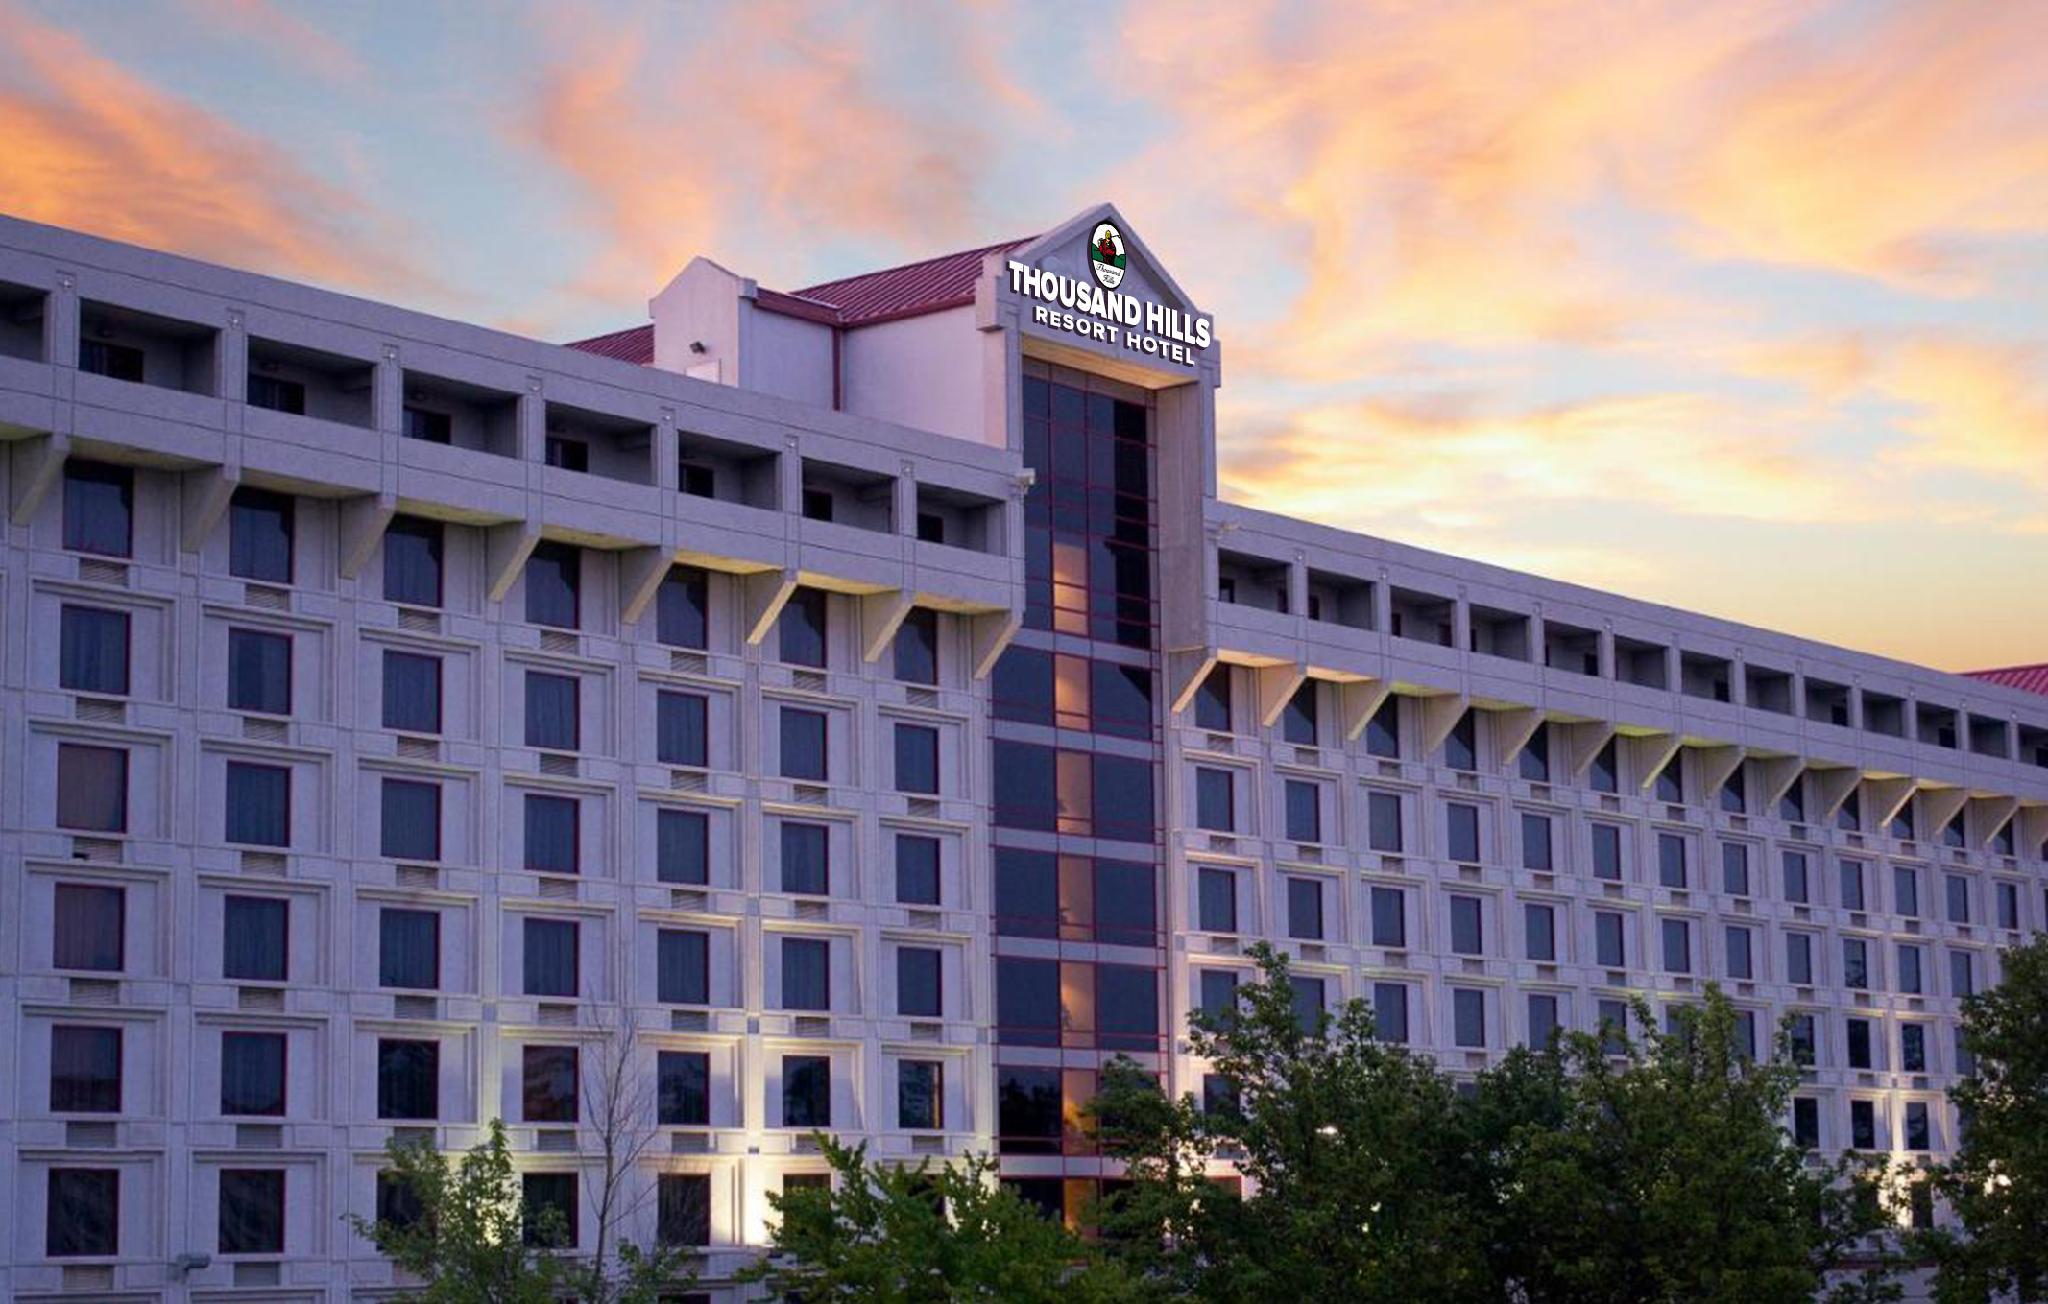 Thousand Hills Resort Hotel - Branson, MO